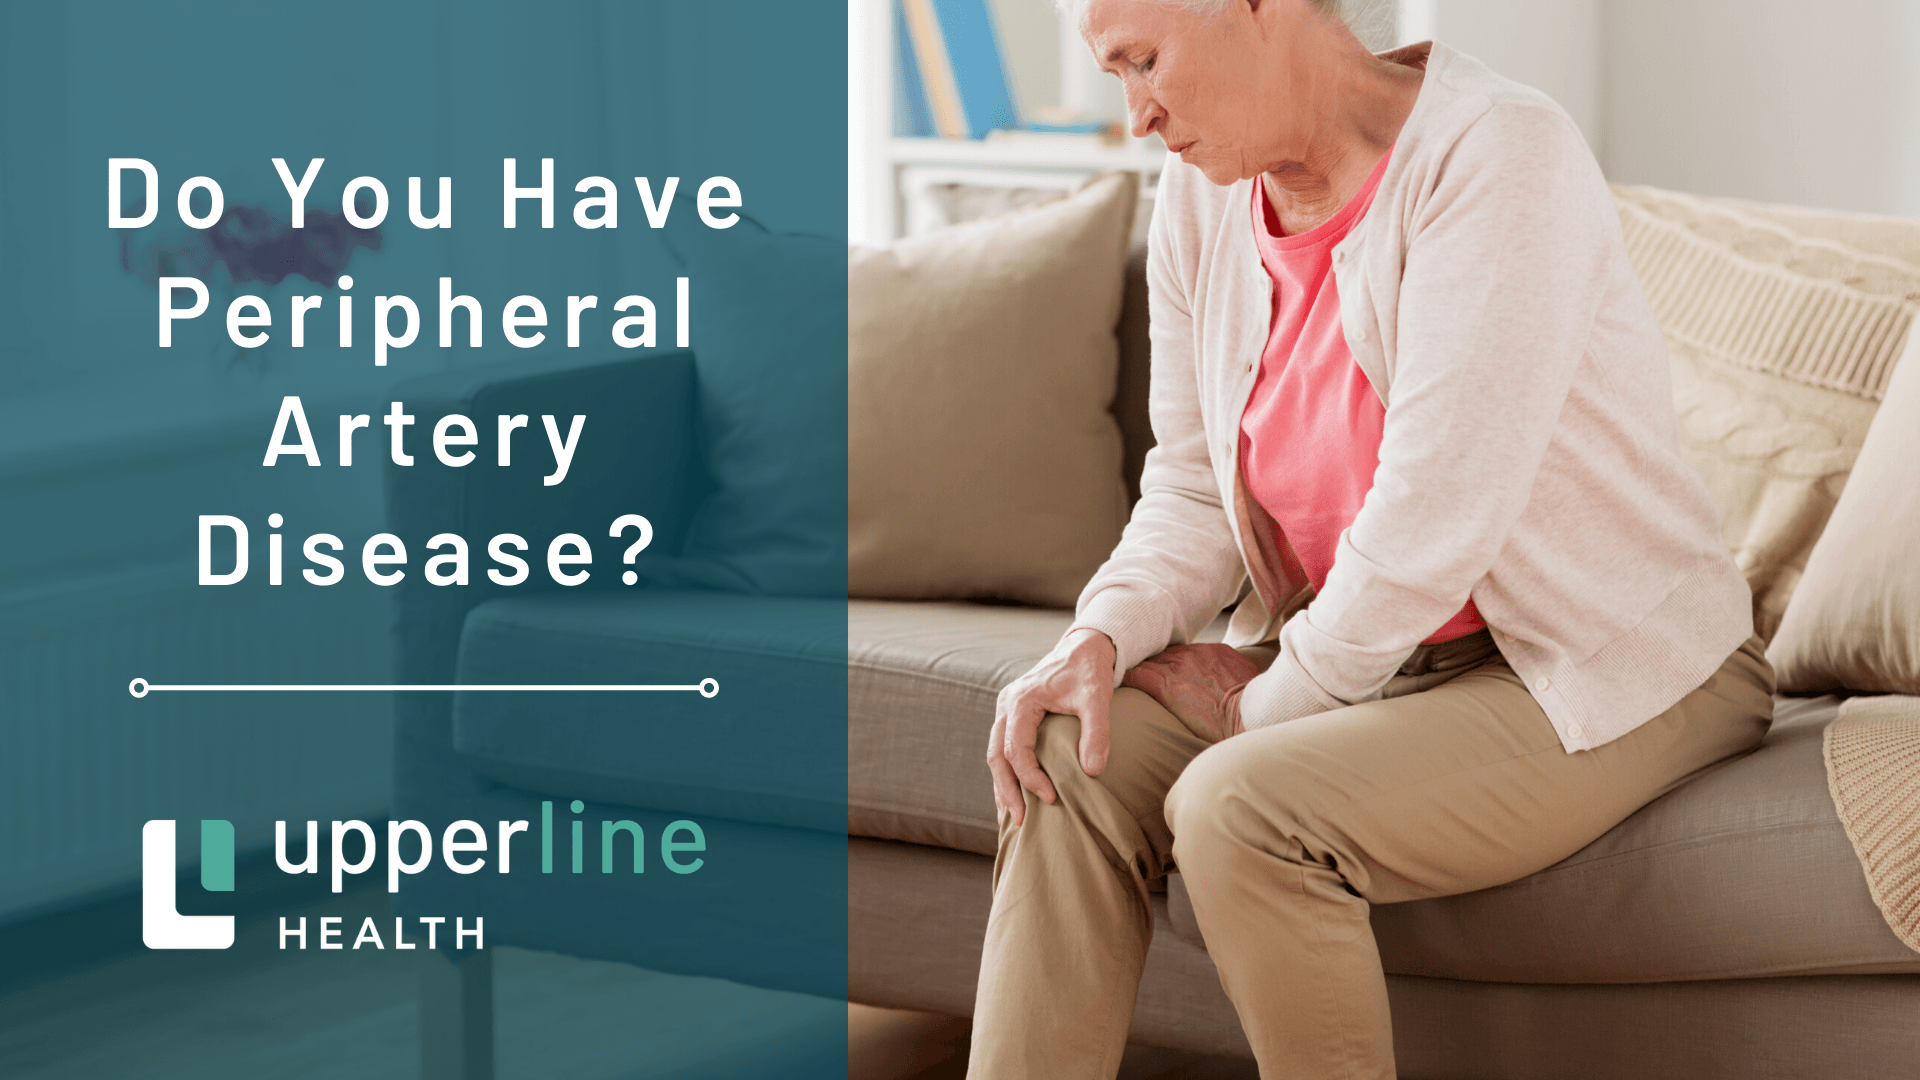 Do You Have Peripheral Artery Disease?